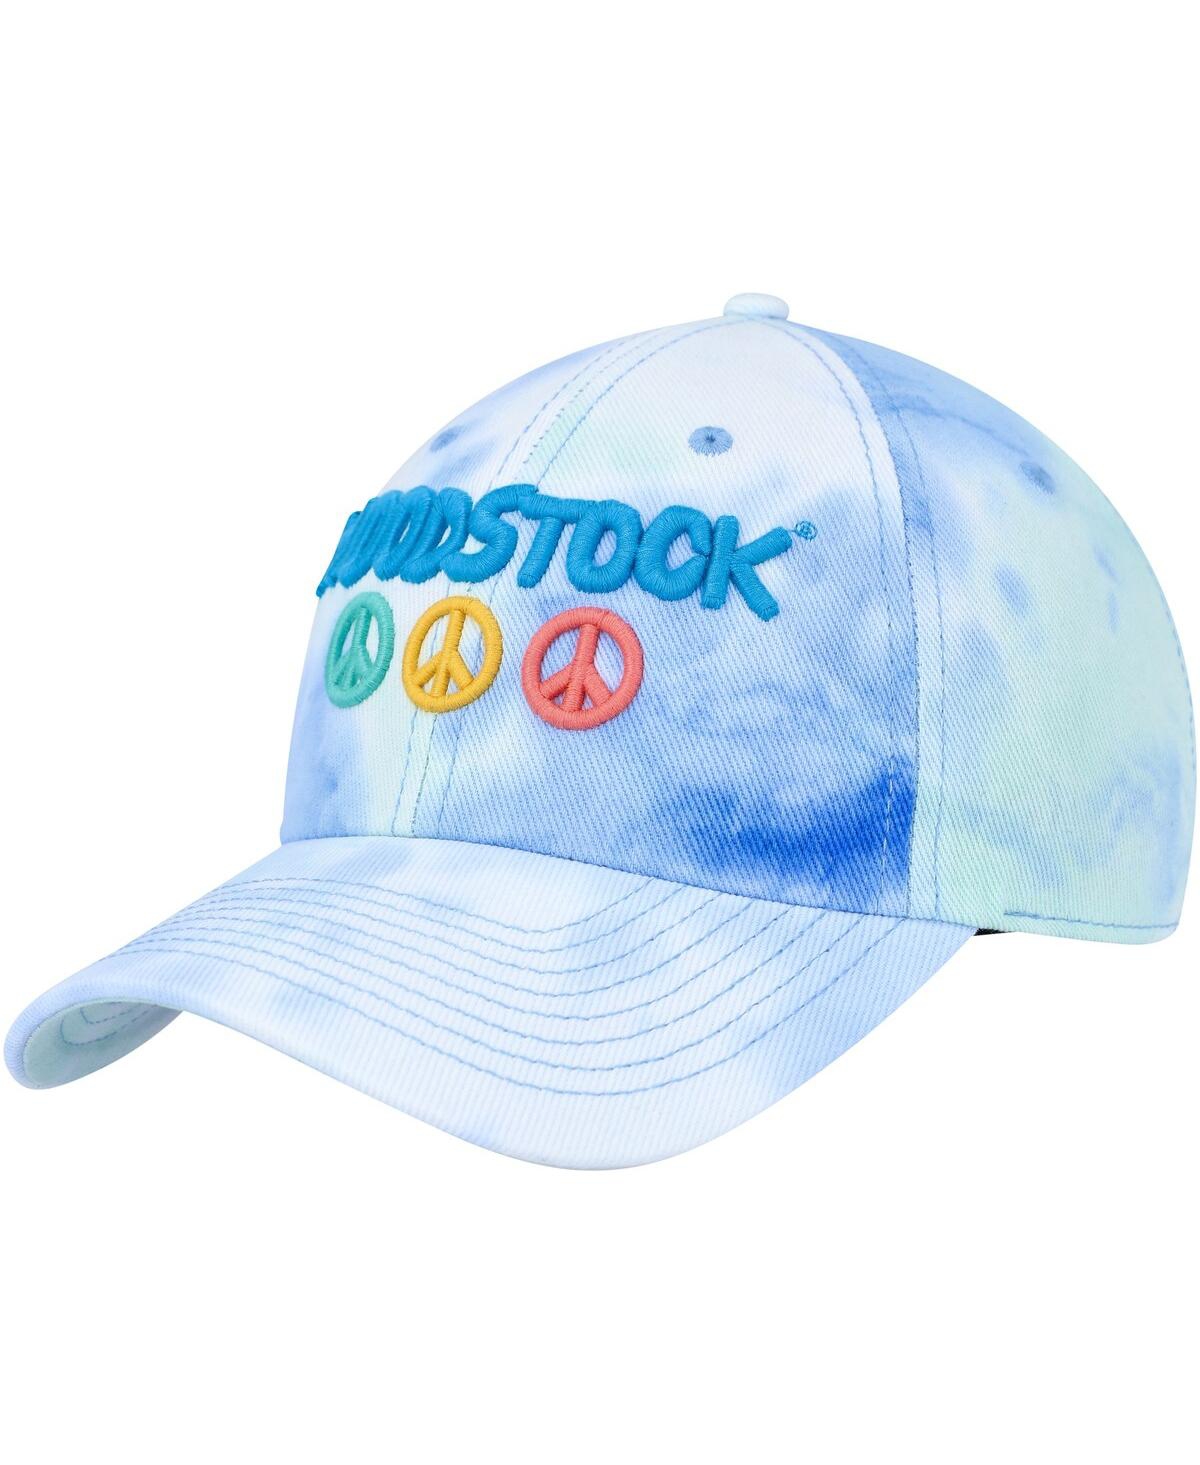 Men's and Women's American Needle Blue Woodstock Ballpark Adjustable Hat - Blue